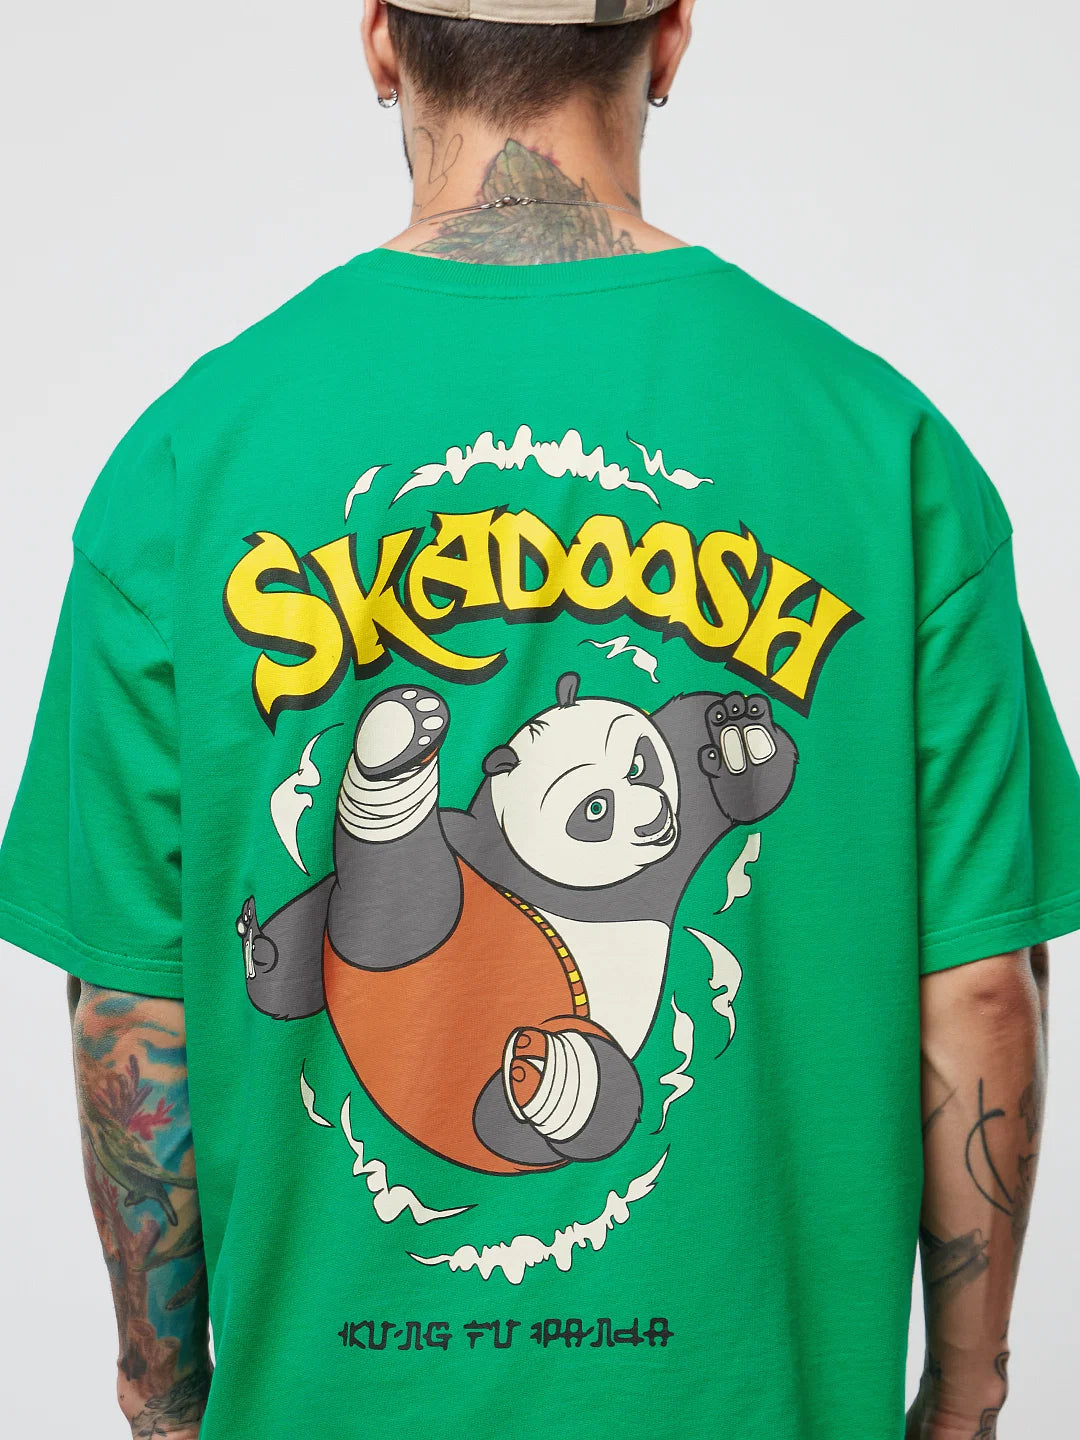 Kung Fu Panda Skadoosh (UK version)